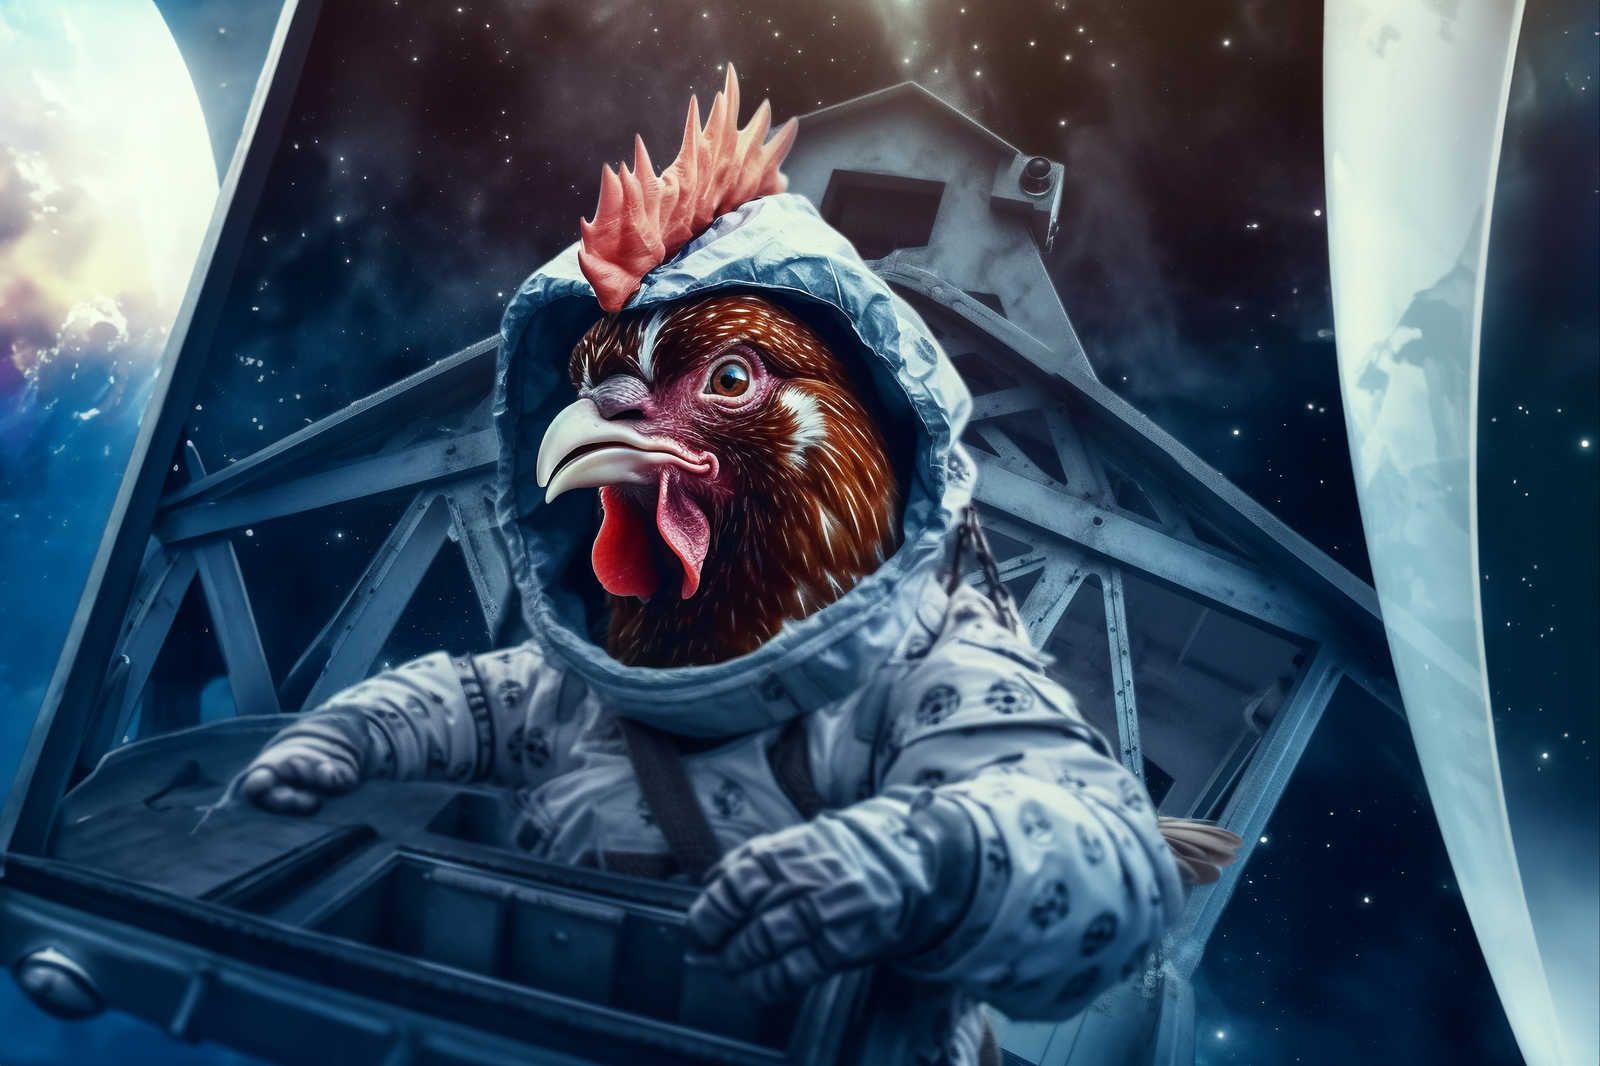             KI-Leinwandbild »Space Chicken« – 120 cm x 80 cm
        